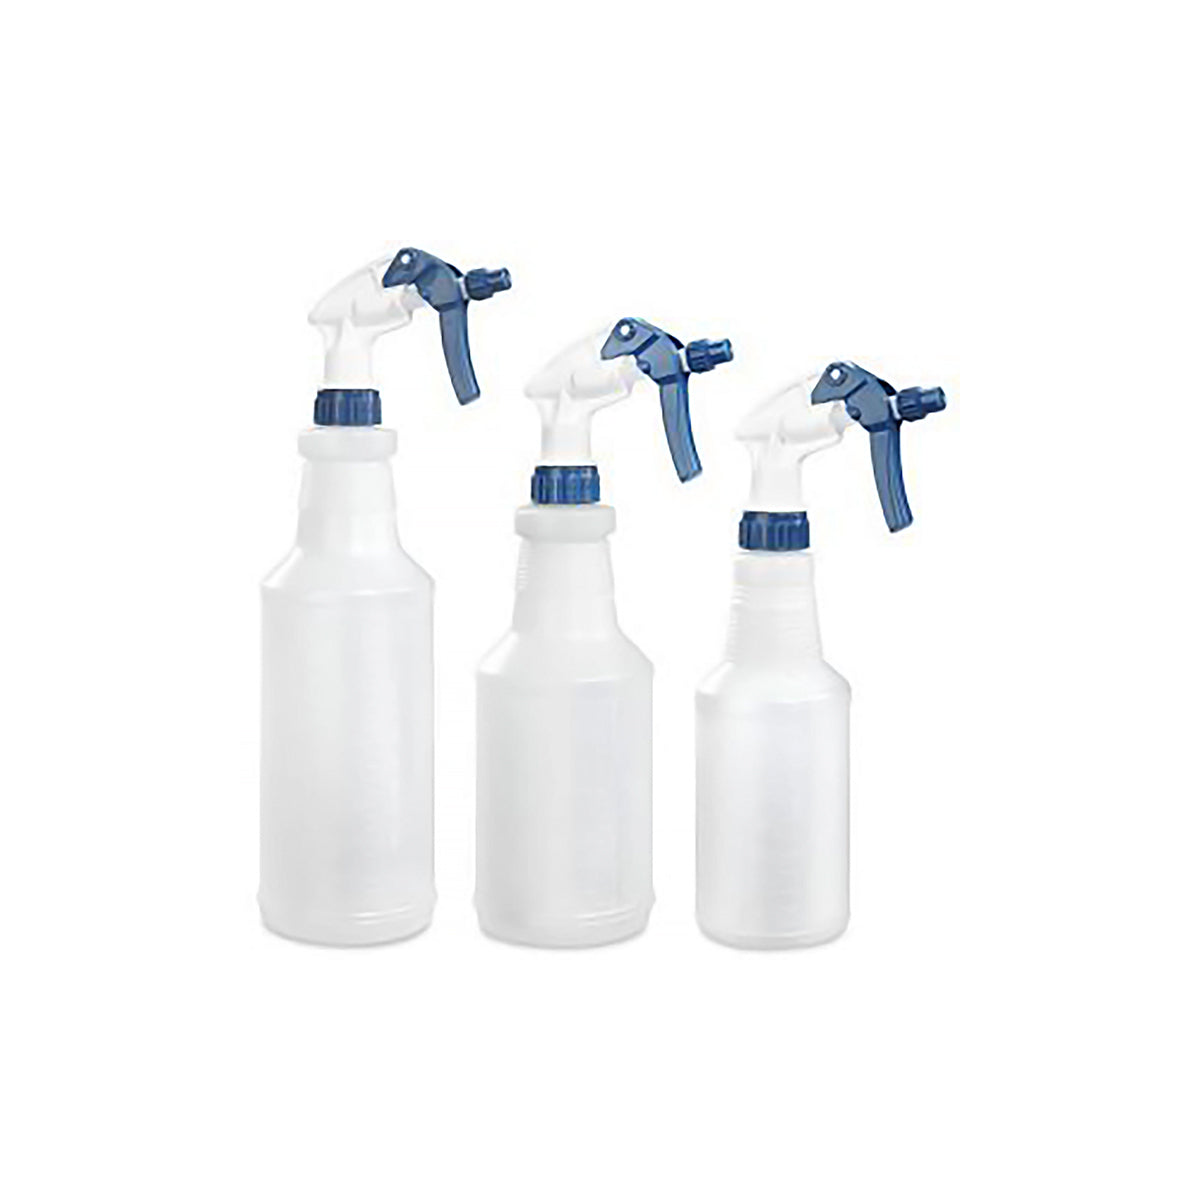 VulClean Spray Bottles